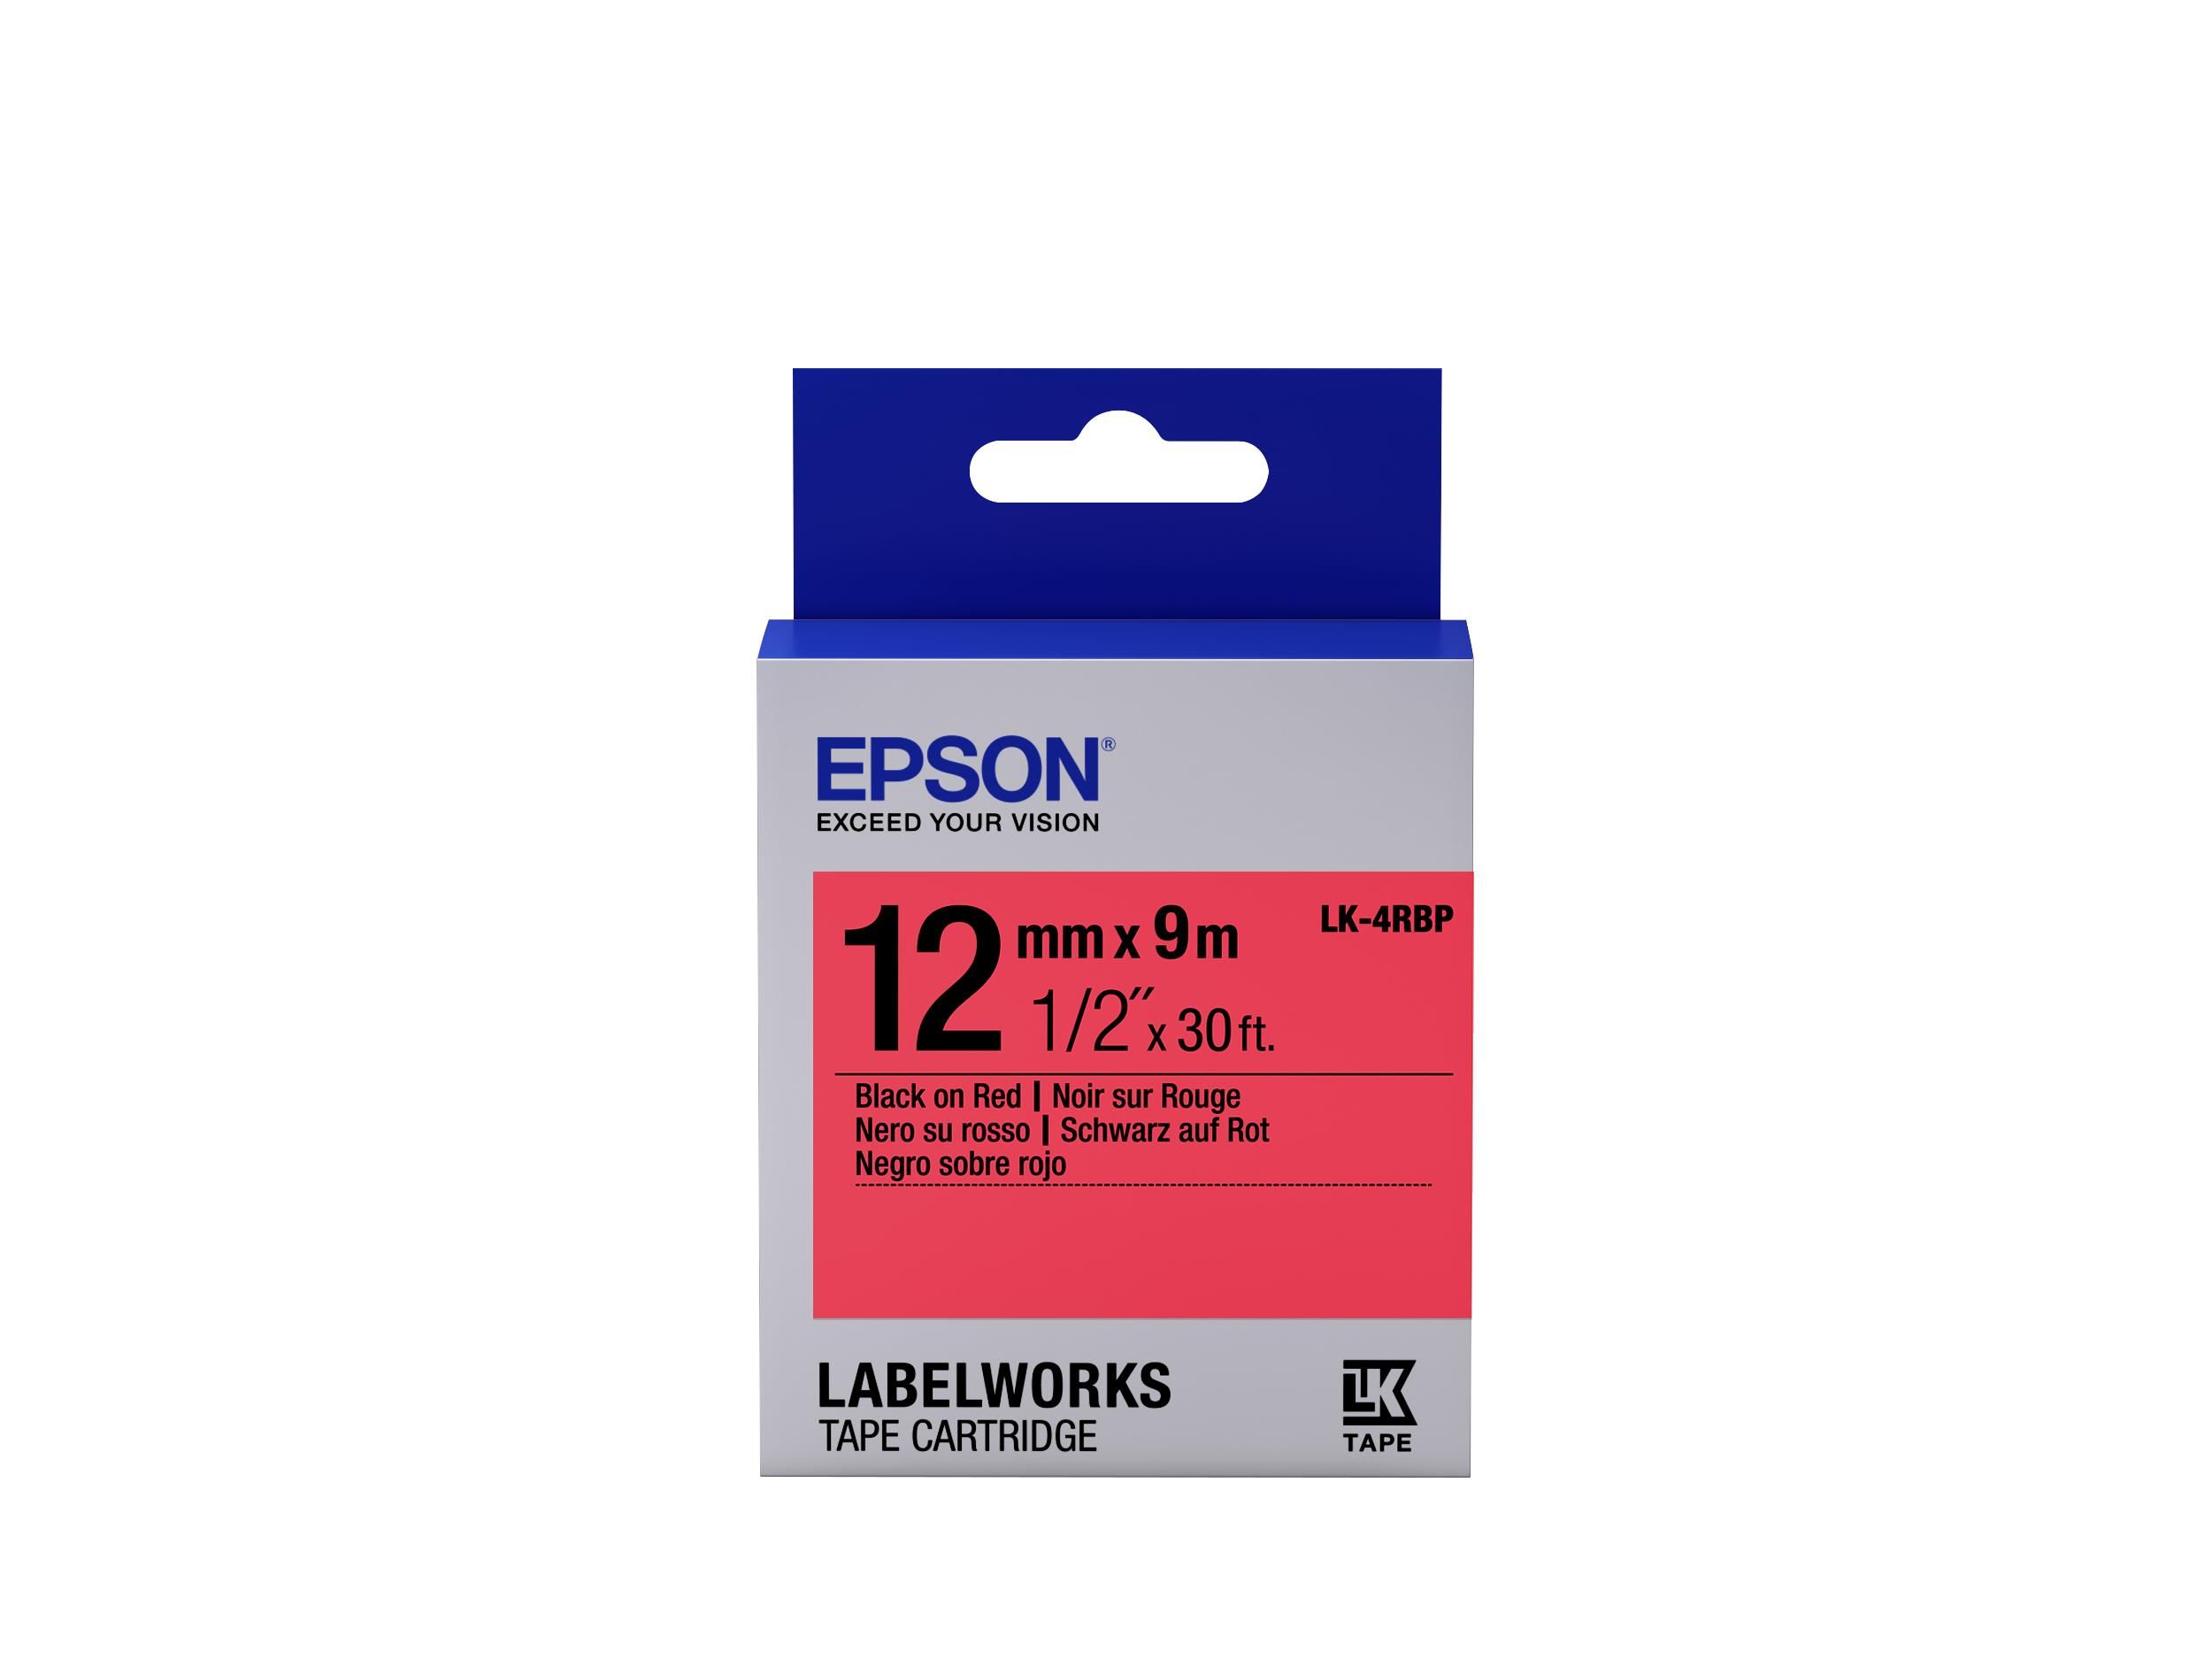 Epson Nastro Lk4rbp Pastel